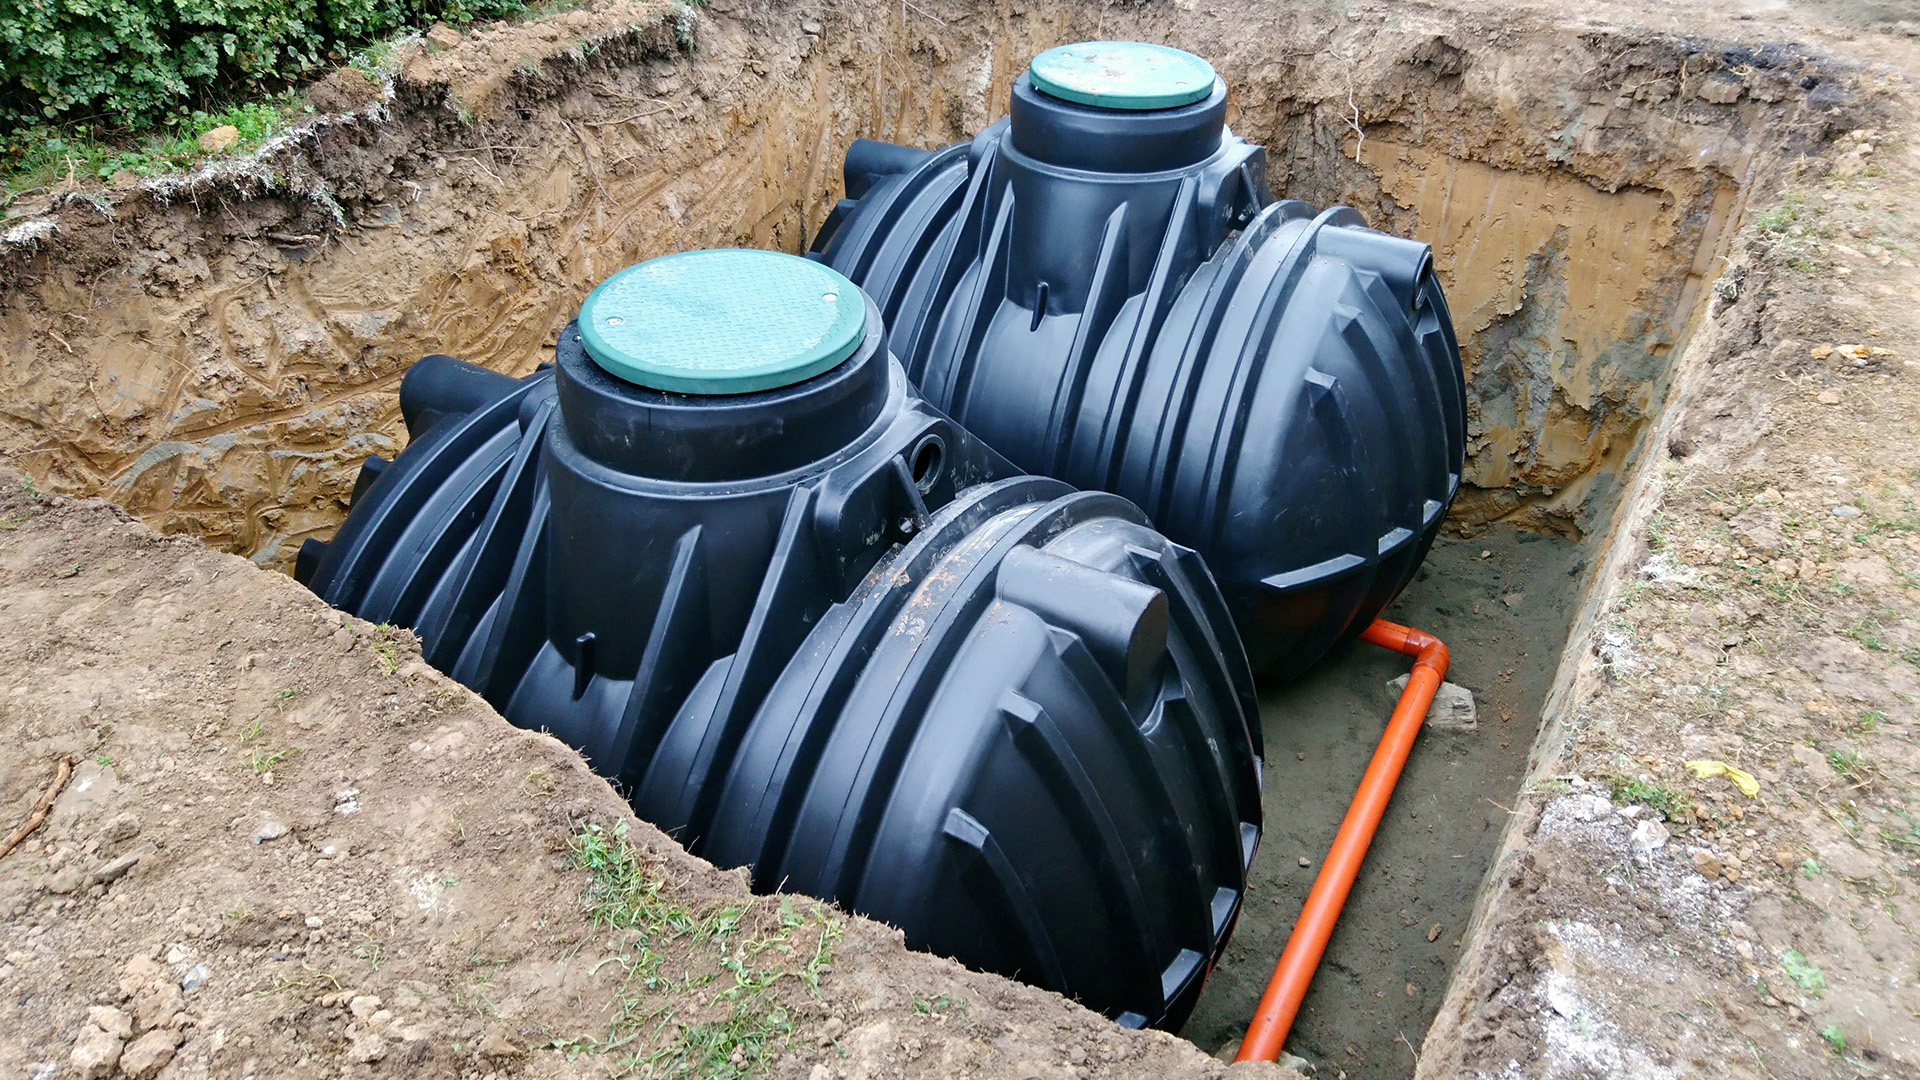 Rainwater harvesting cisterns